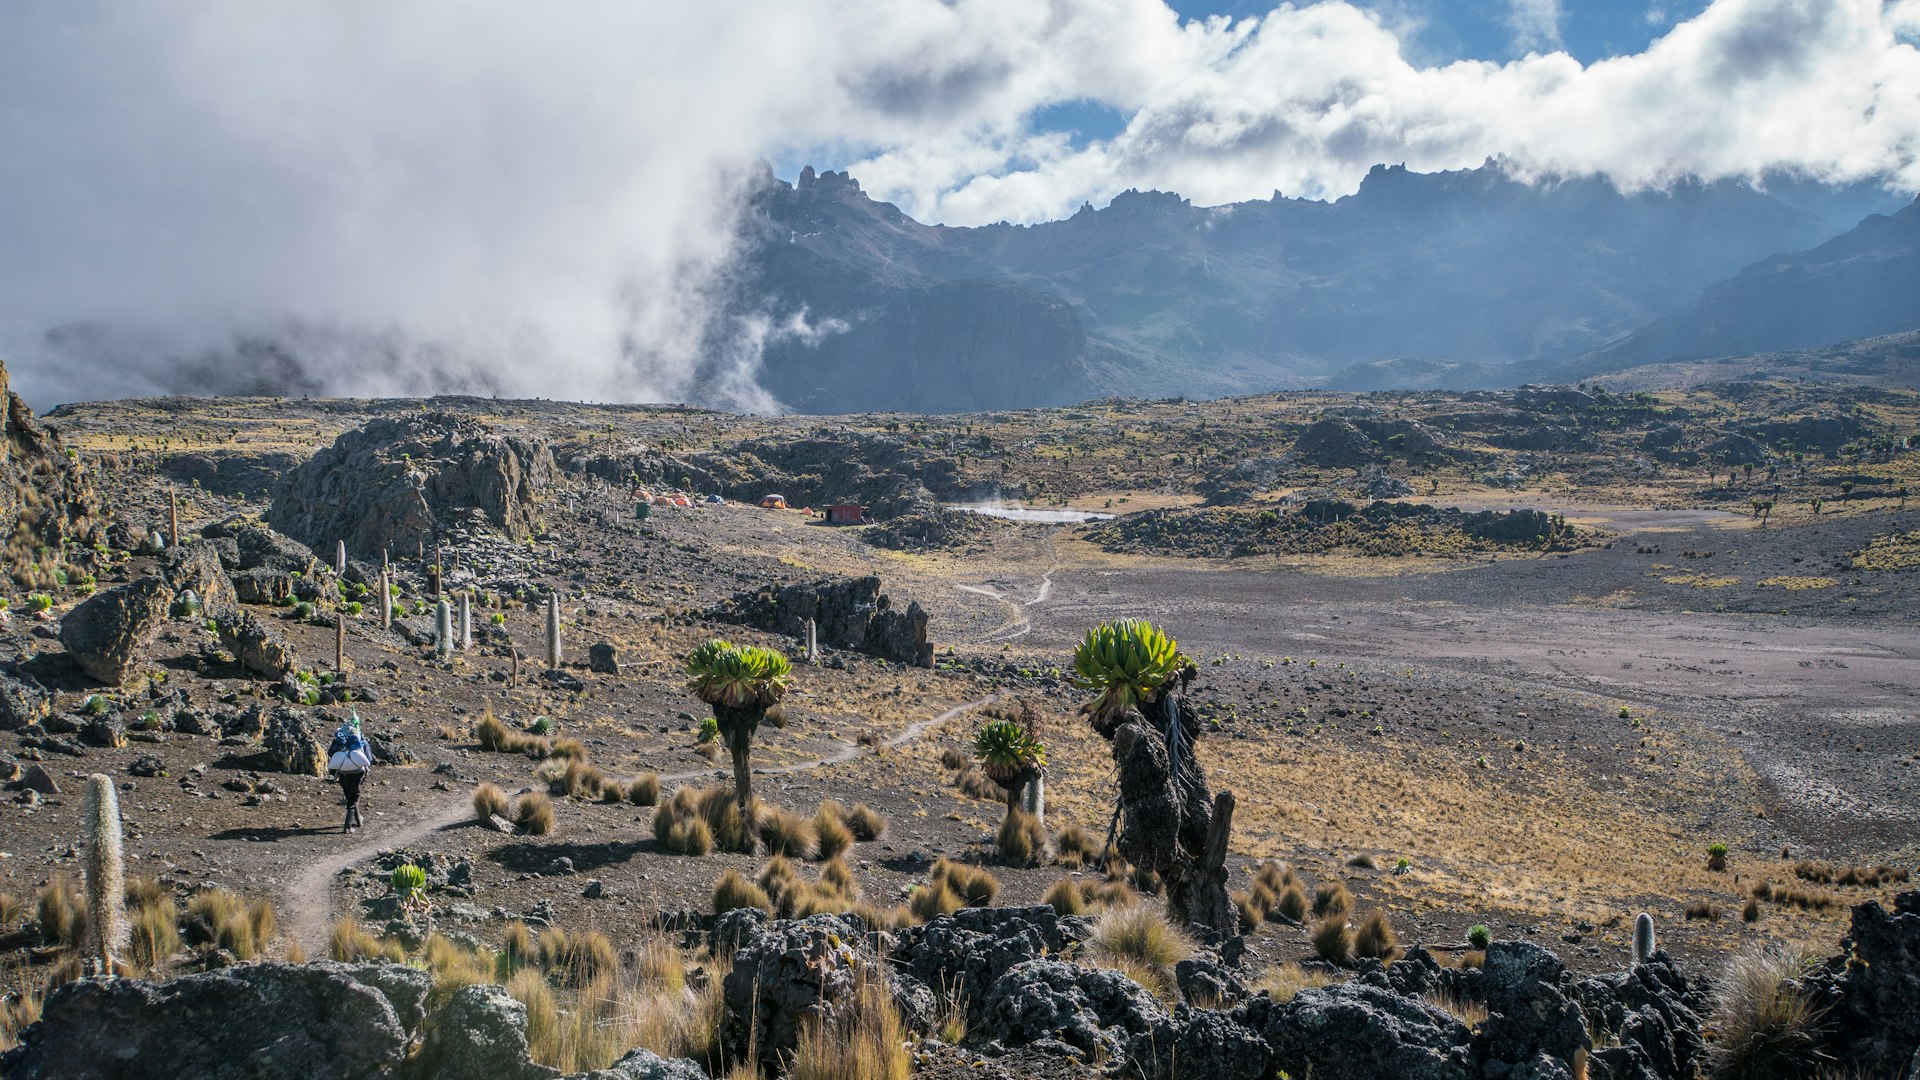 Scenery on Mt Kenya at 4200m above sea level 